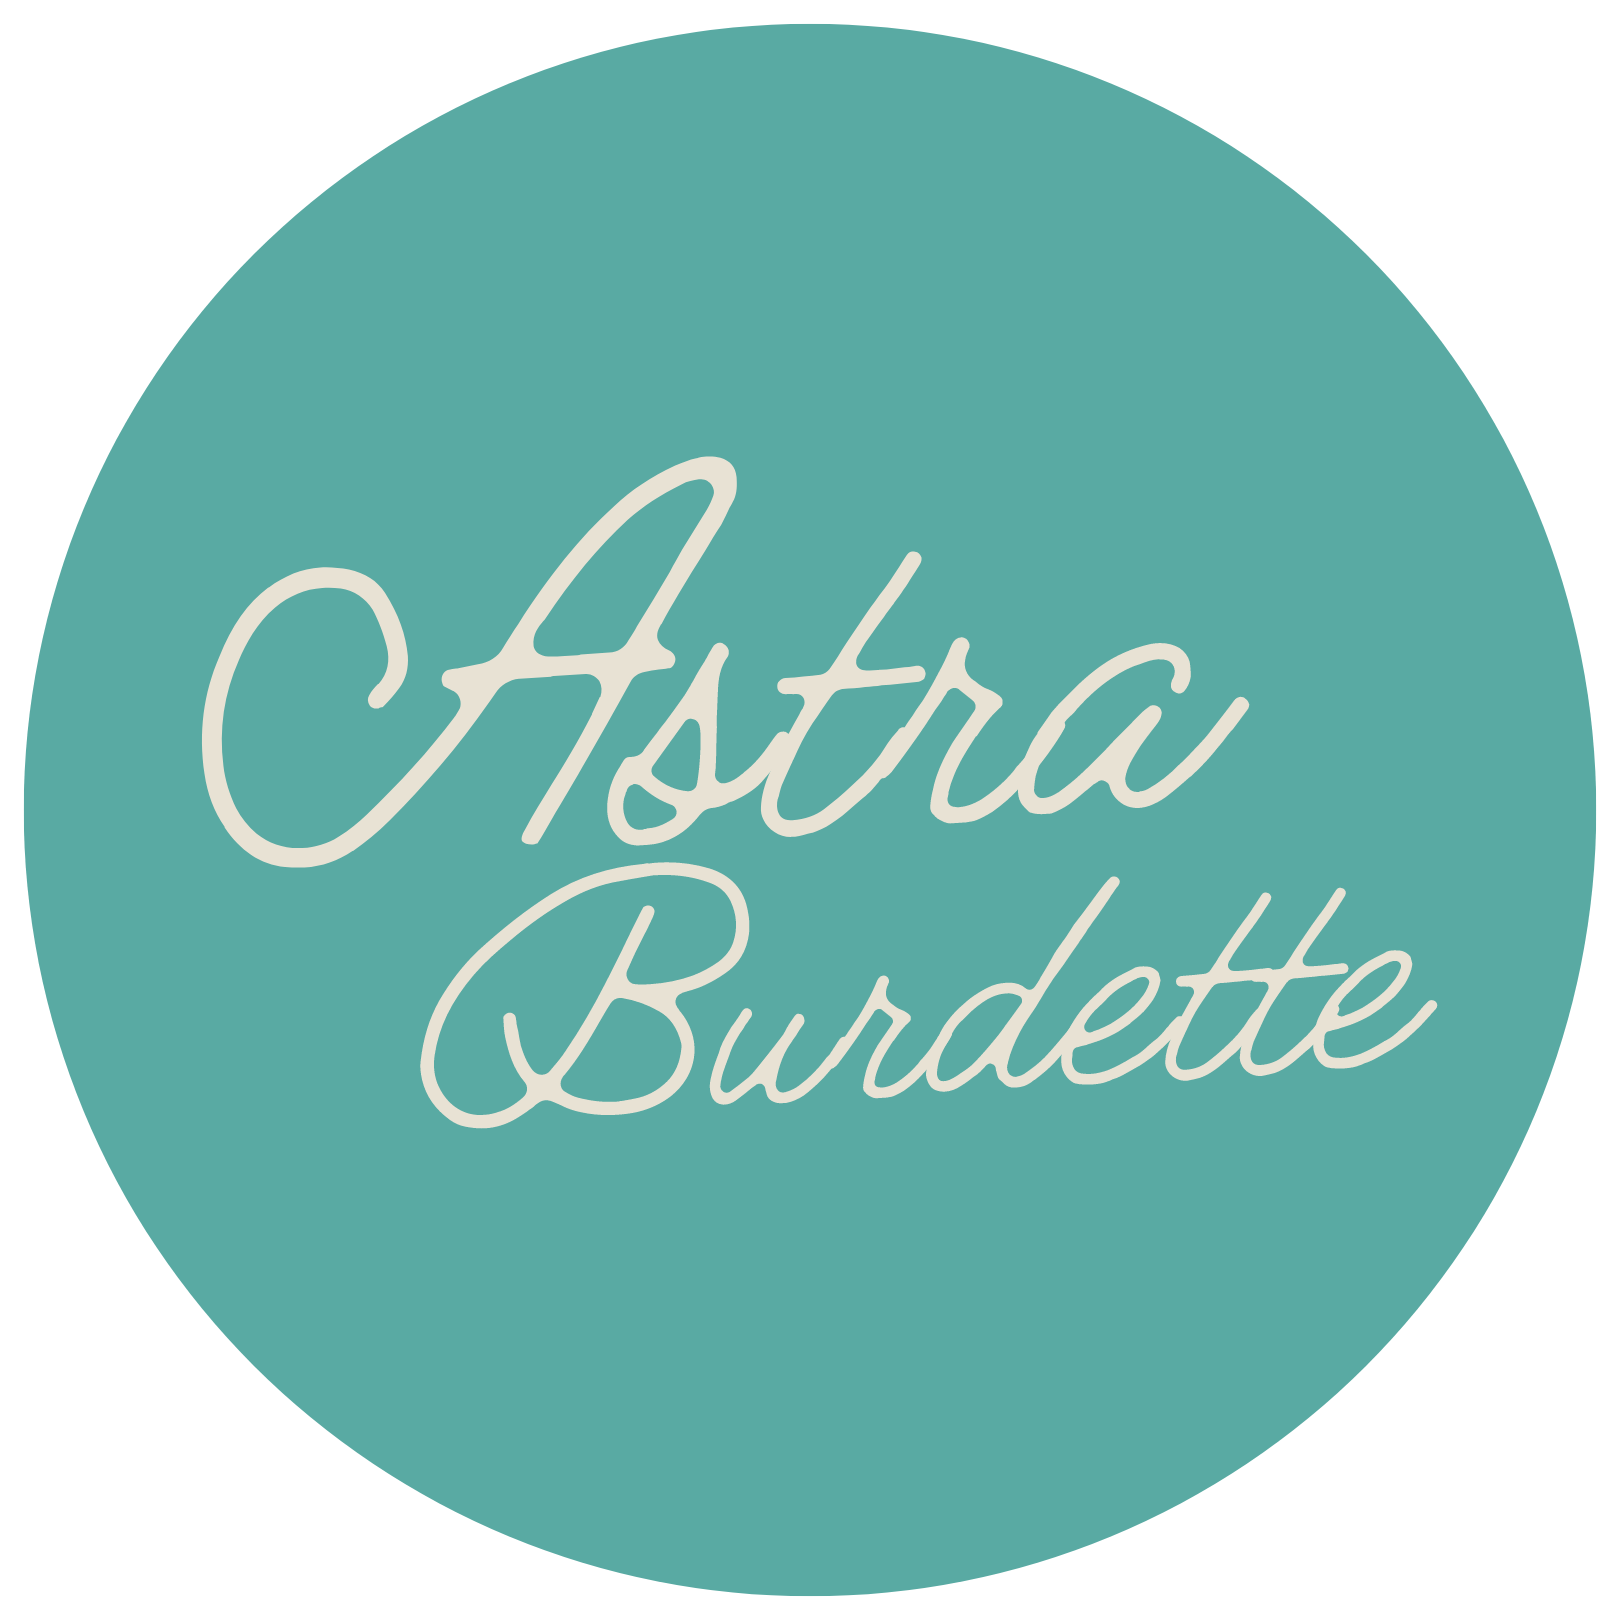 Astra Burdette